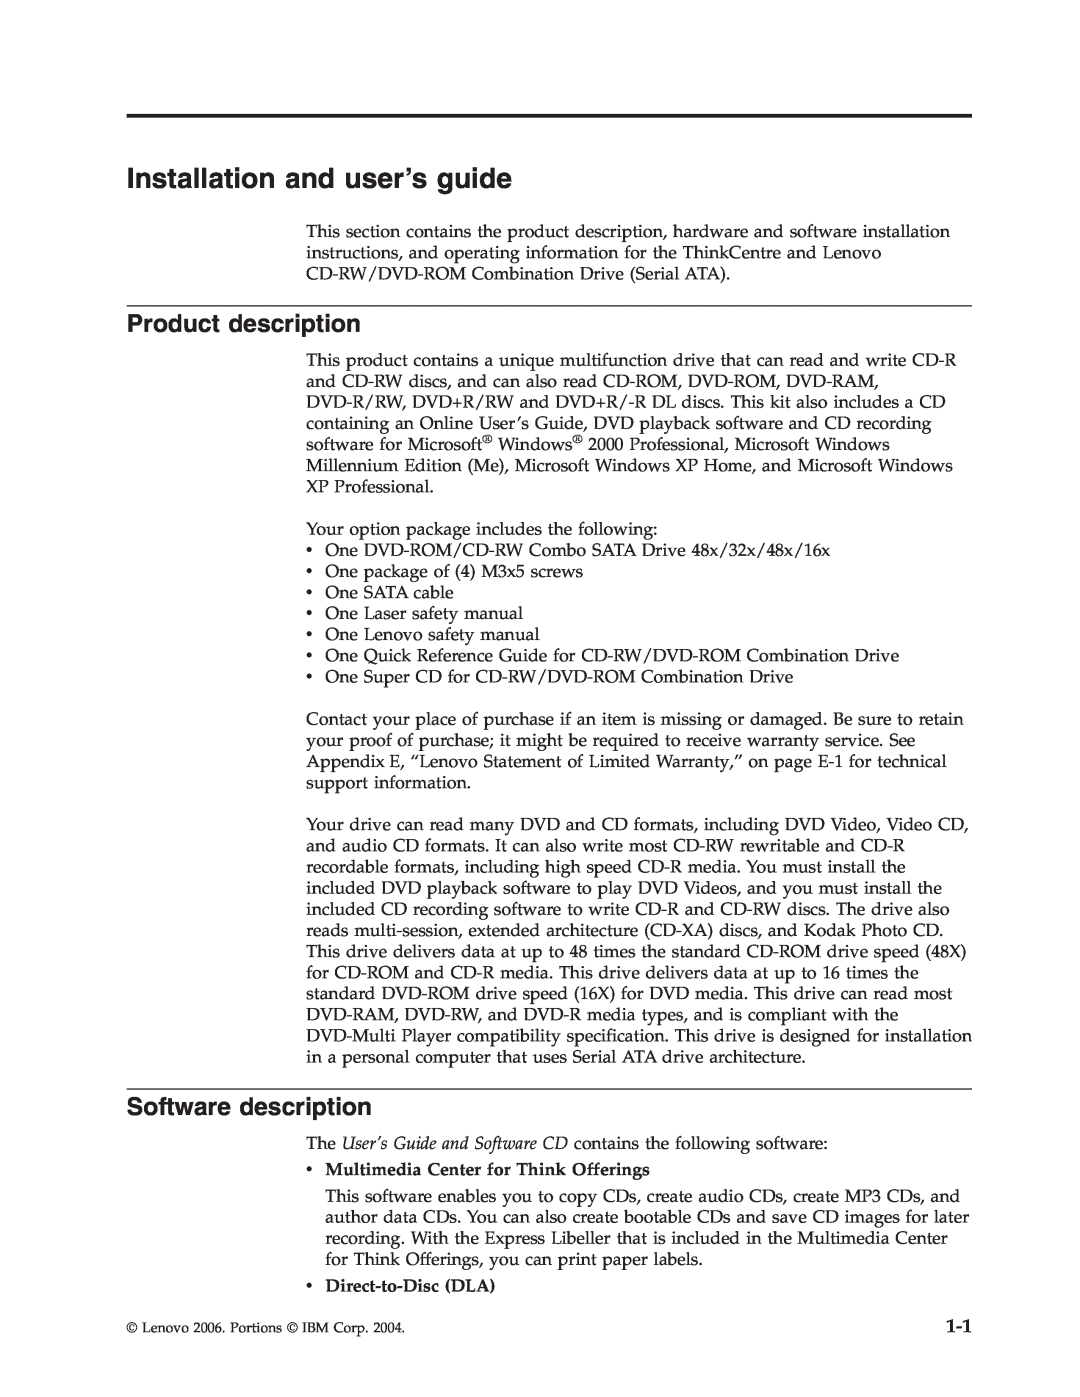 Lenovo 41N5624 manual Installation and user’s guide, Product description, Software description, vDirect-to-DiscDLA 